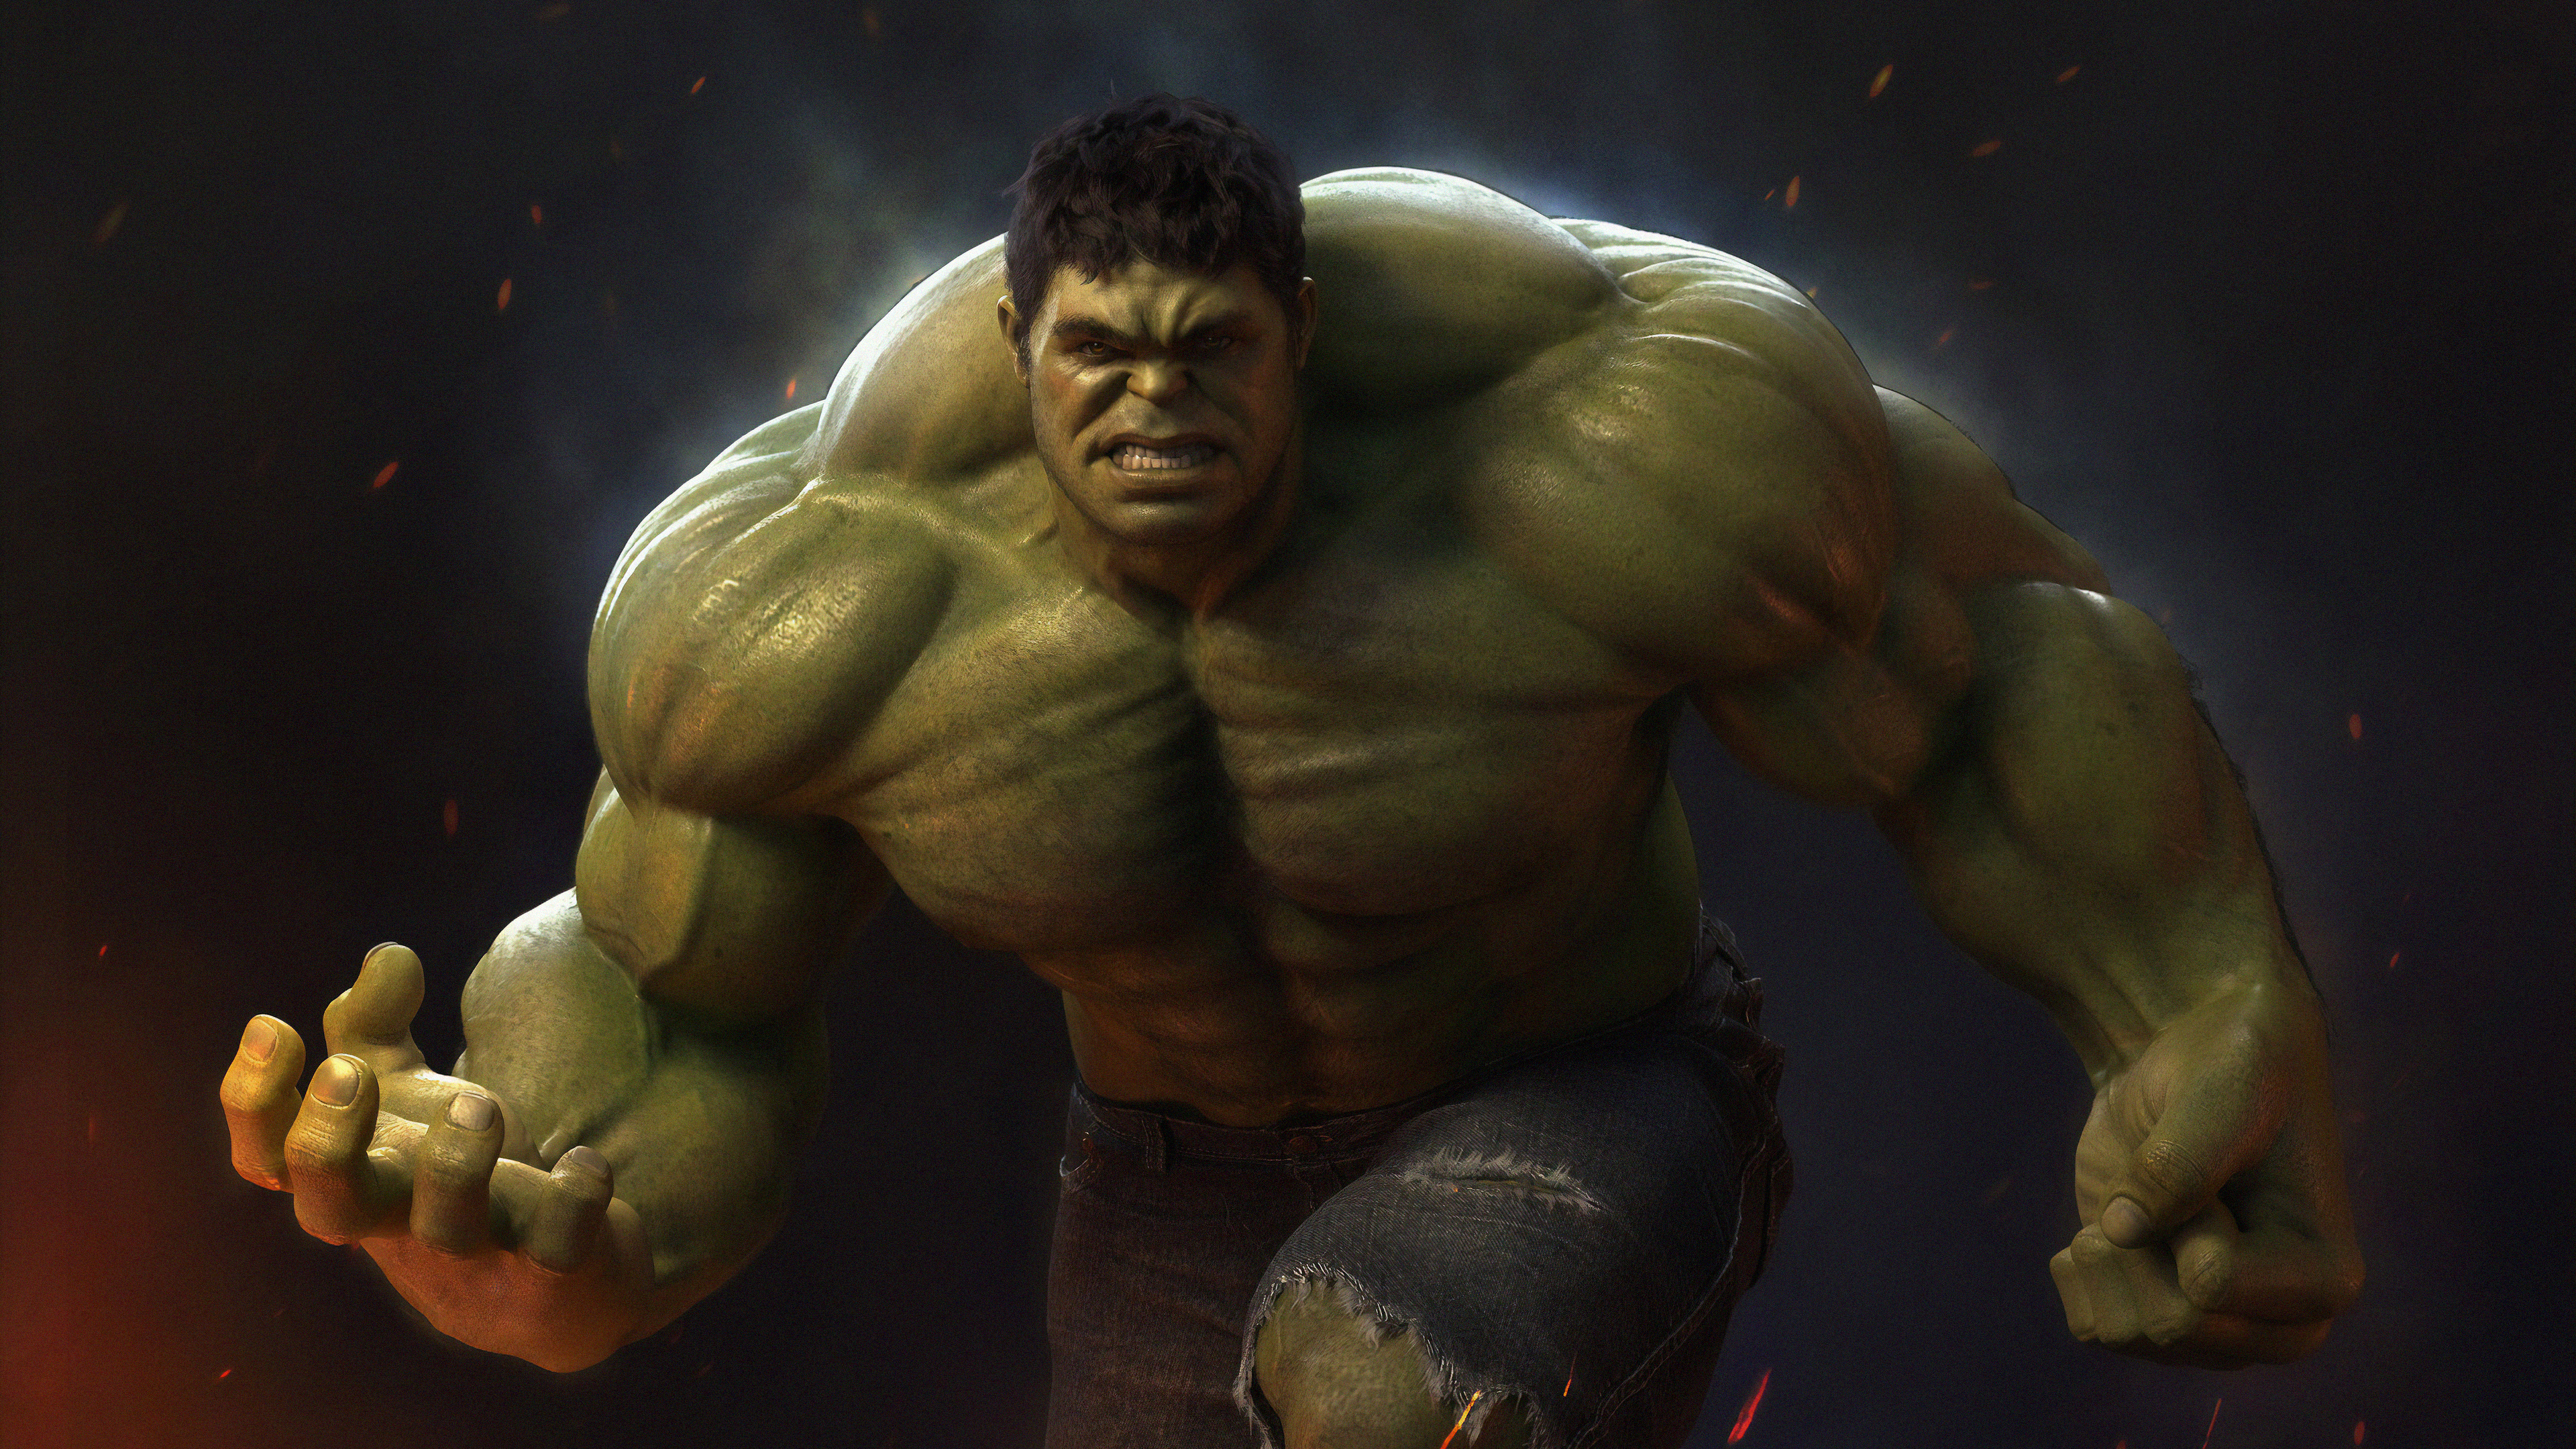 General 3840x2160 Hulk Hulk (film) muscles superhero Marvel Cinematic Universe Avengers Endgame green digital art